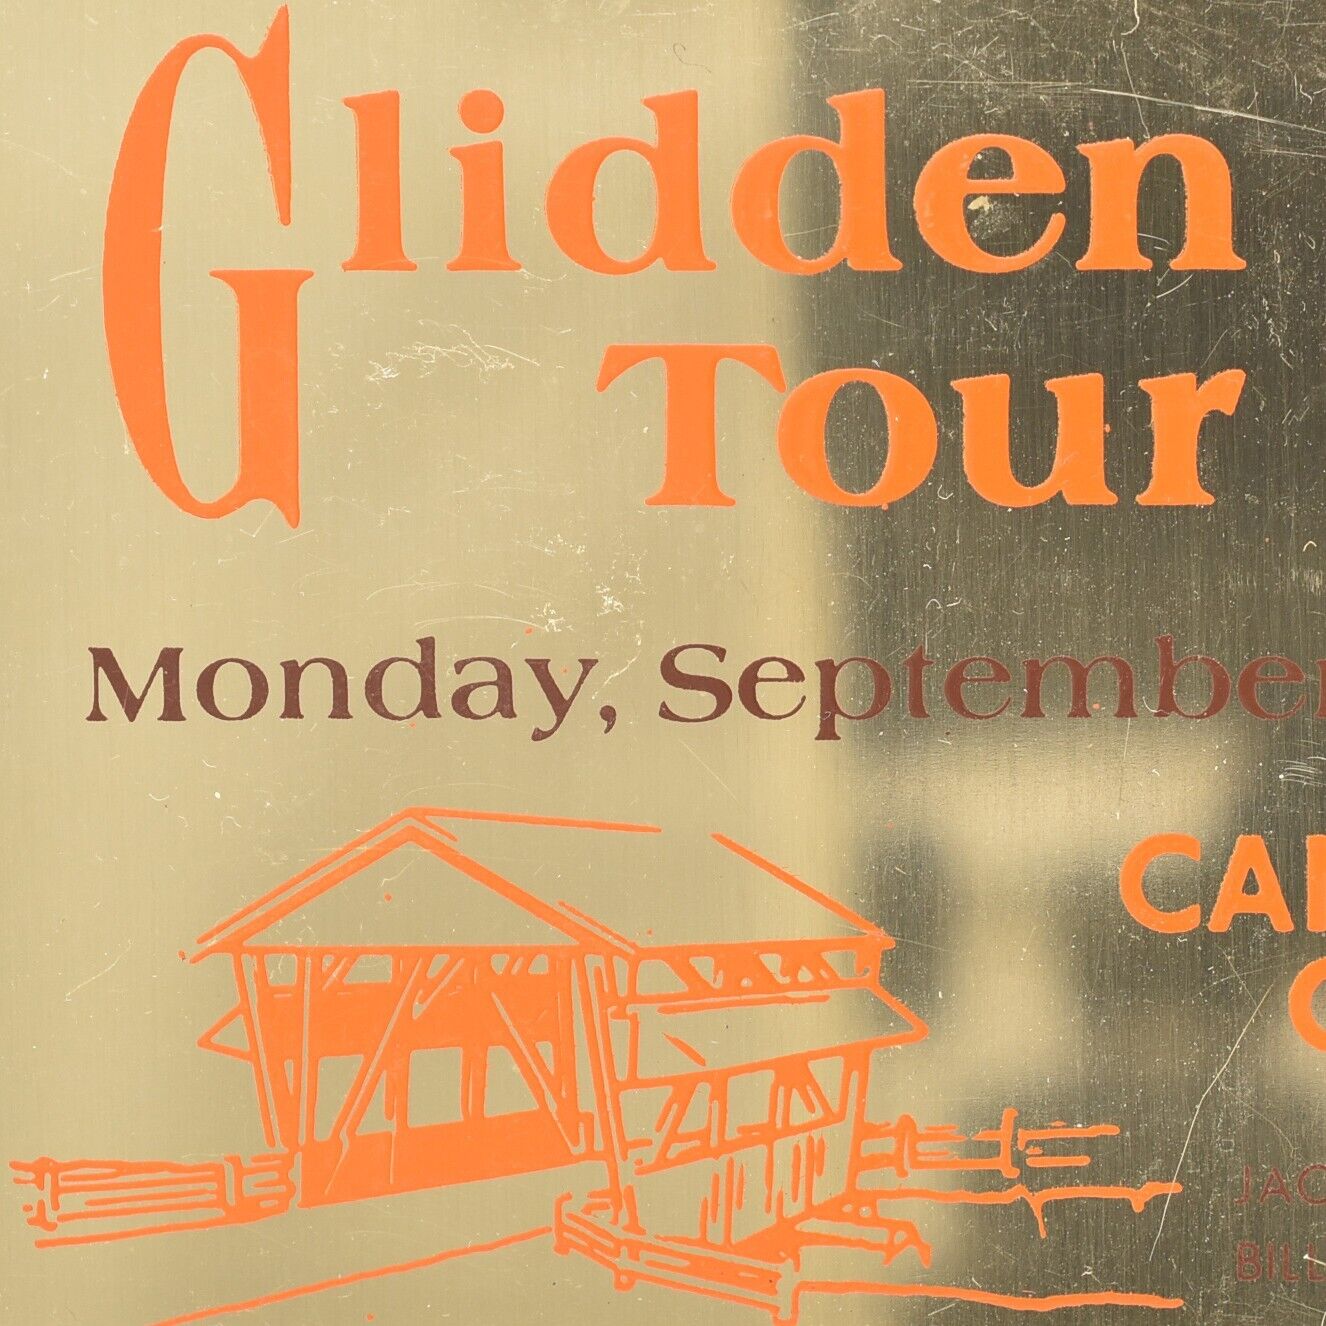 1987 Antique Auto Club Car Show Meet AACA Glidden Tour Canton Chapter Ohio